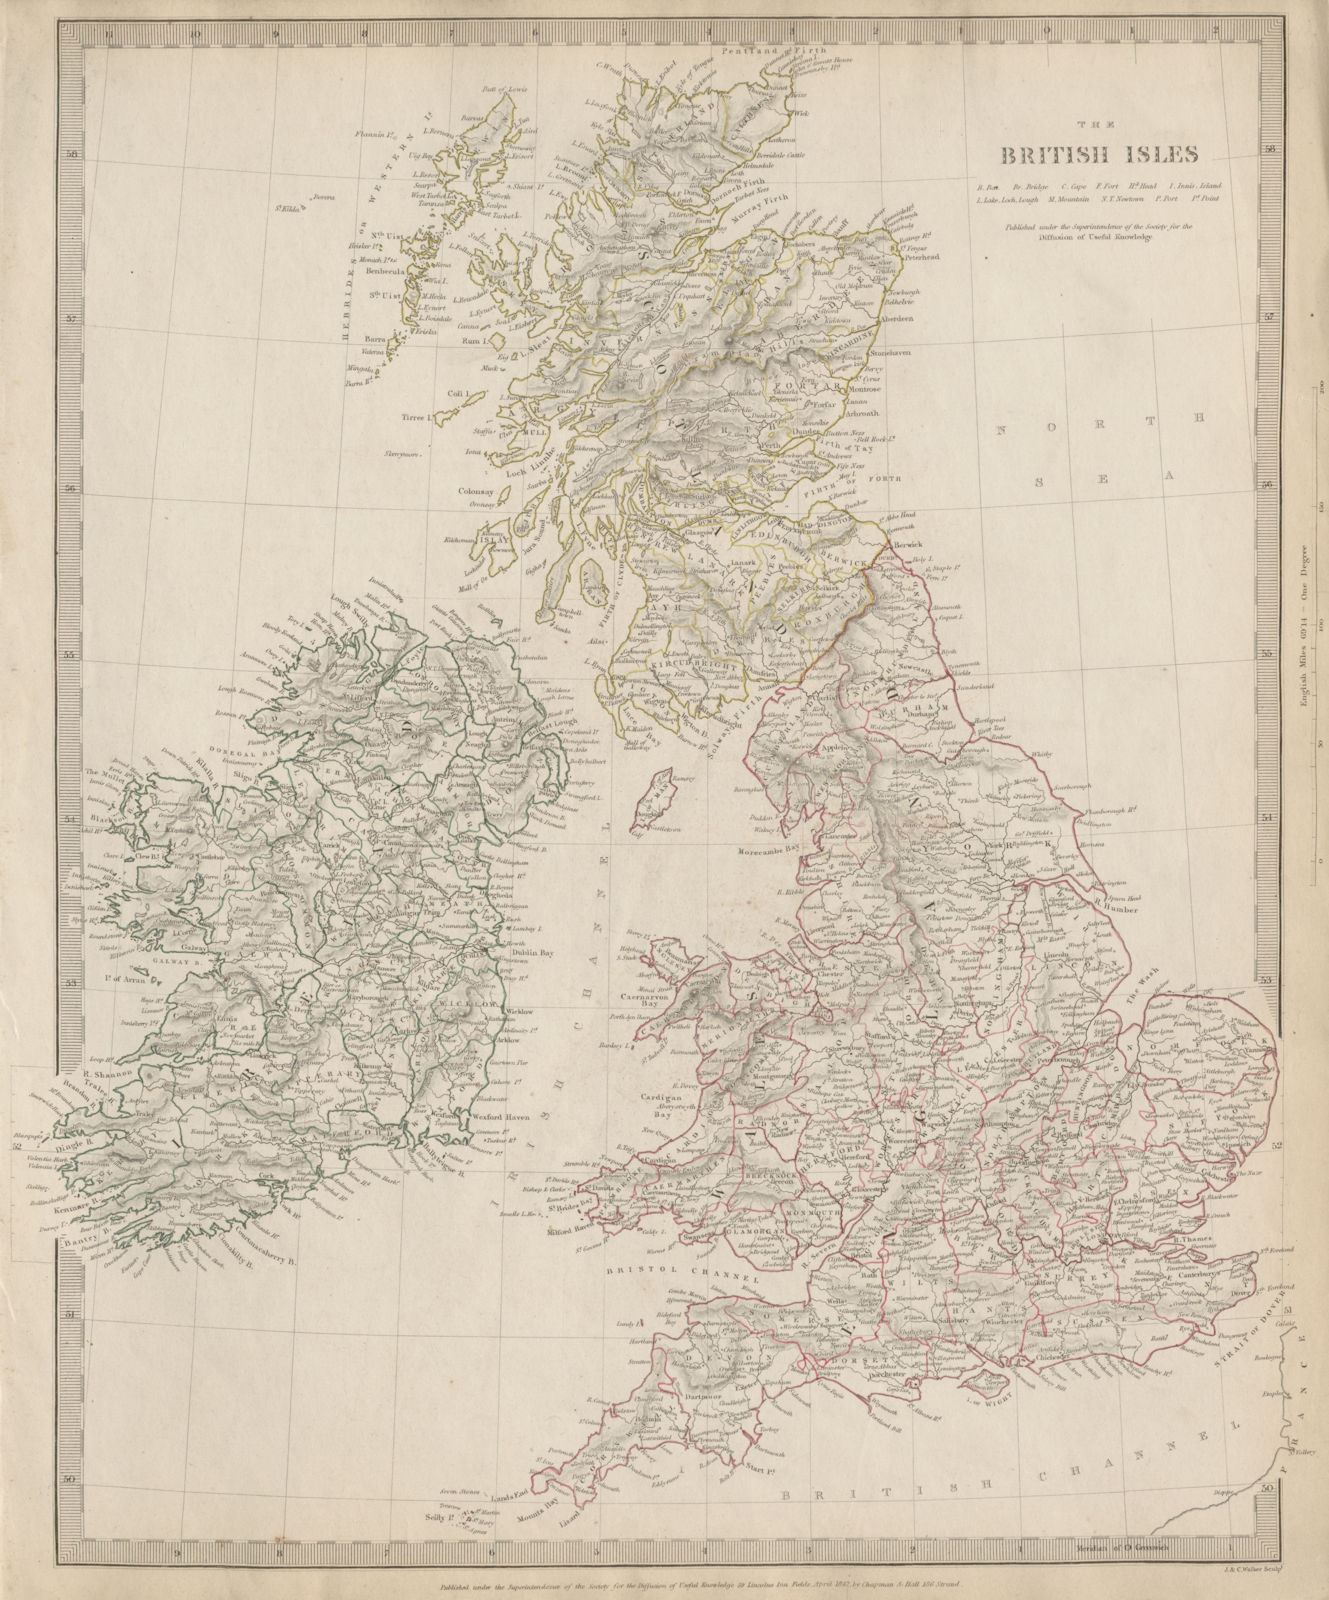 BRITISH ISLES. Great Britain & Ireland. UK. Counties towns rivers. SDUK 1844 map